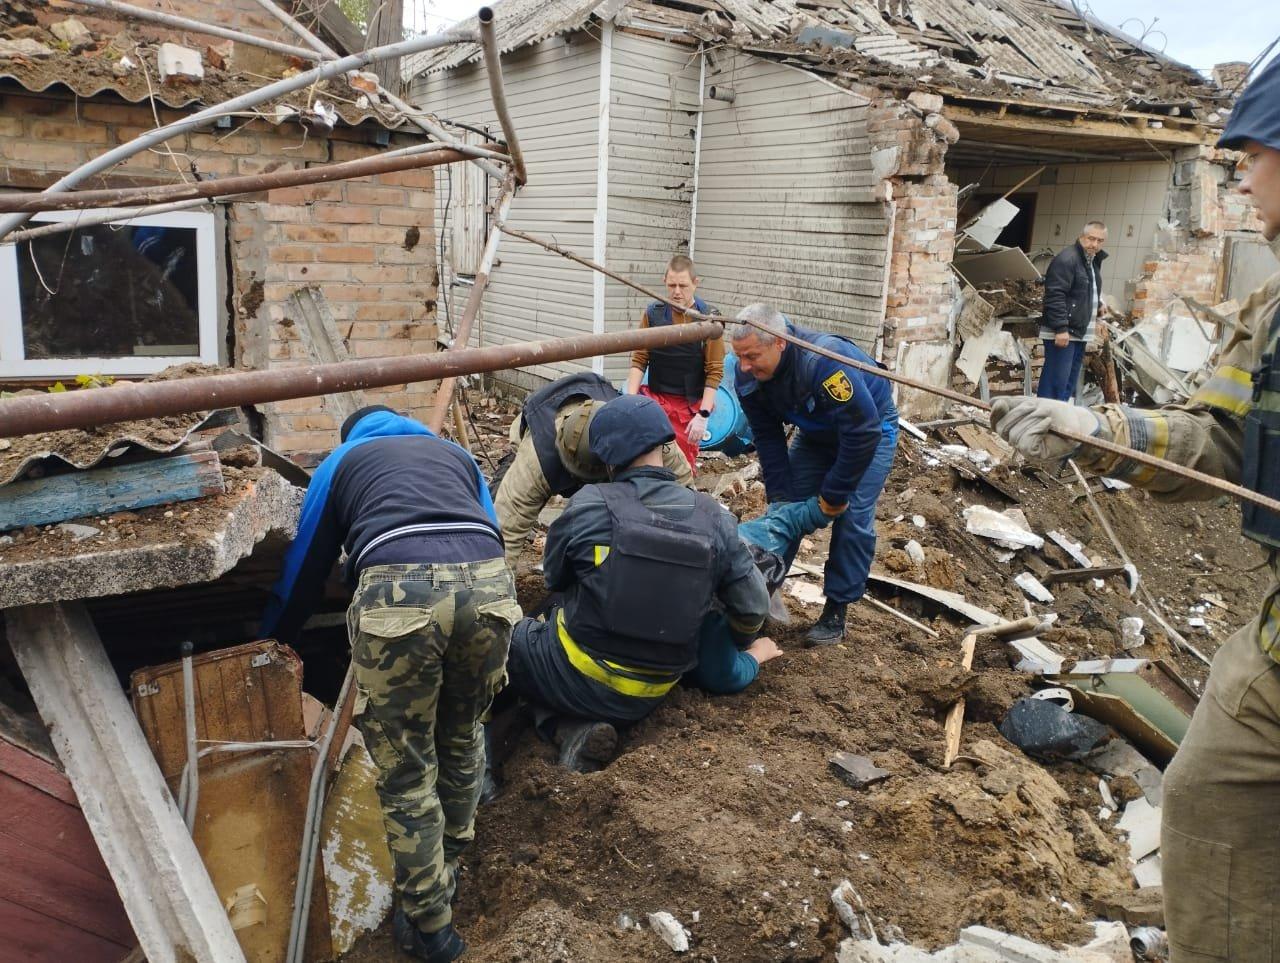 Donecká oblasť. Letecký útok poškodil obytné a kancelárske budovy. Záchranári vyslobodili spod trosiek 6 ľudí